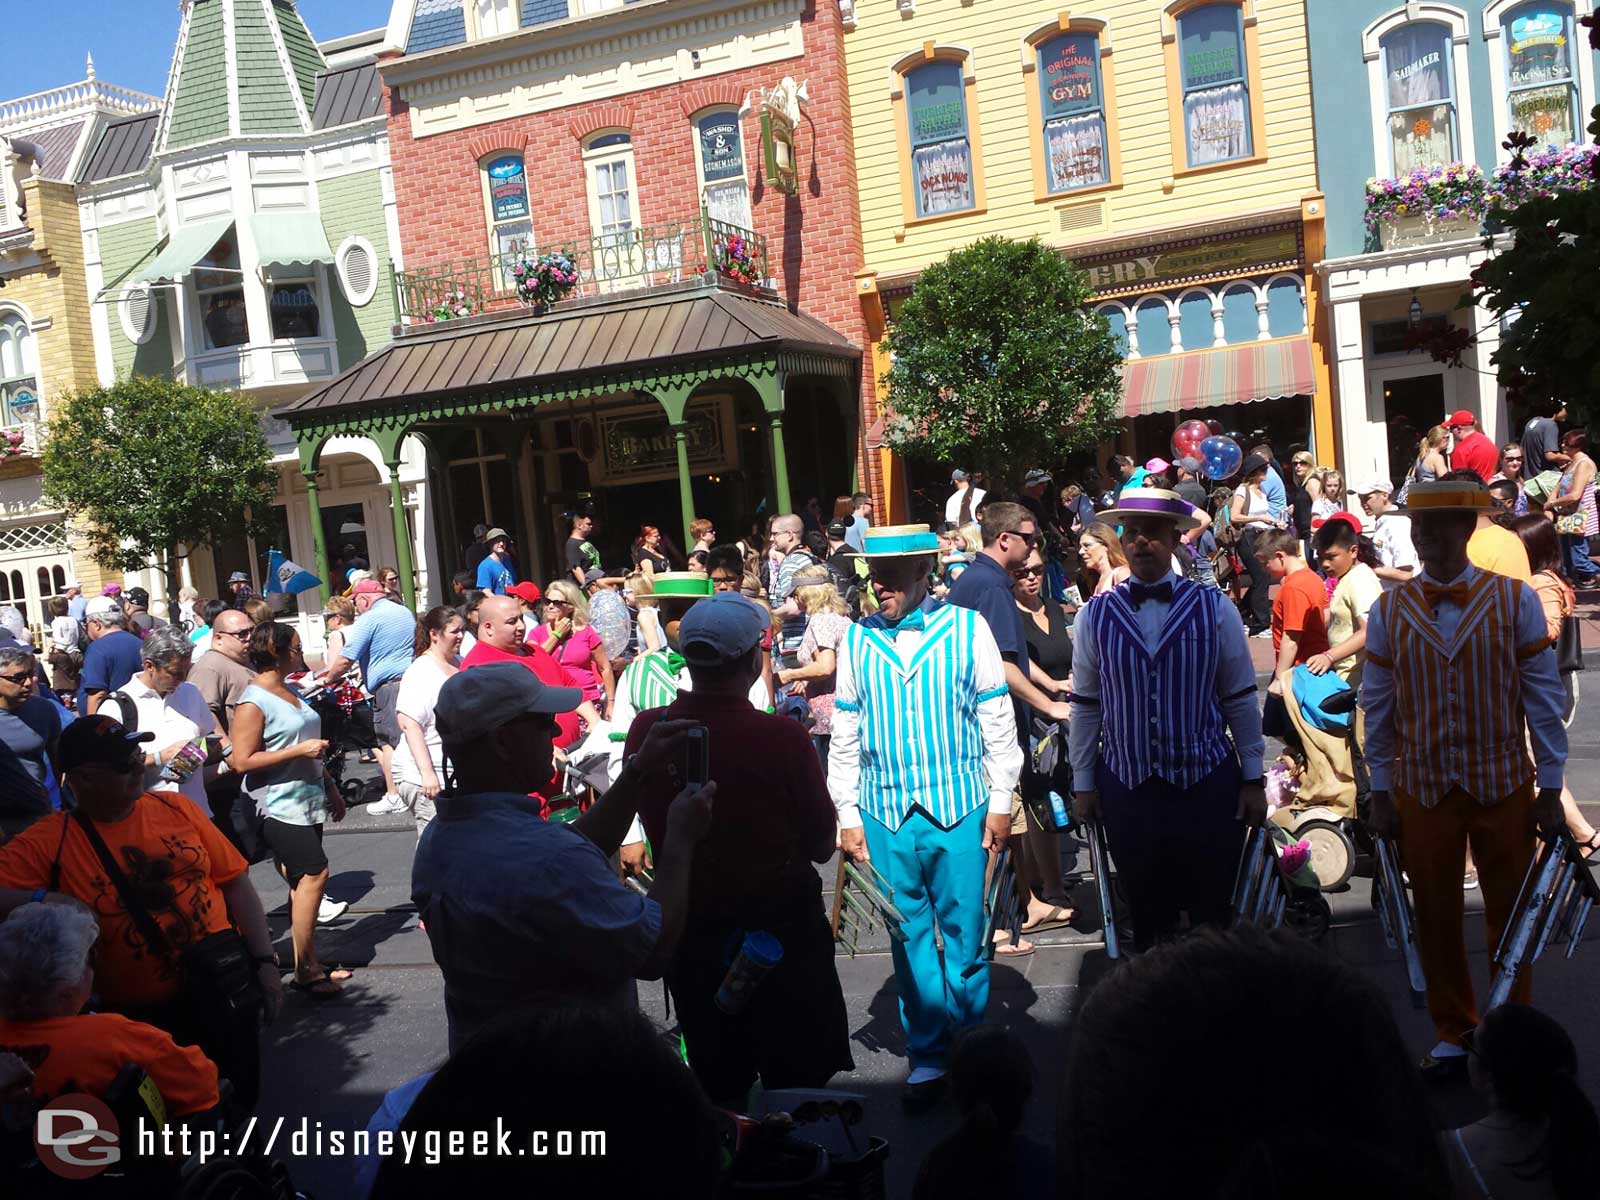 The Dapper Dans performing on Main Street